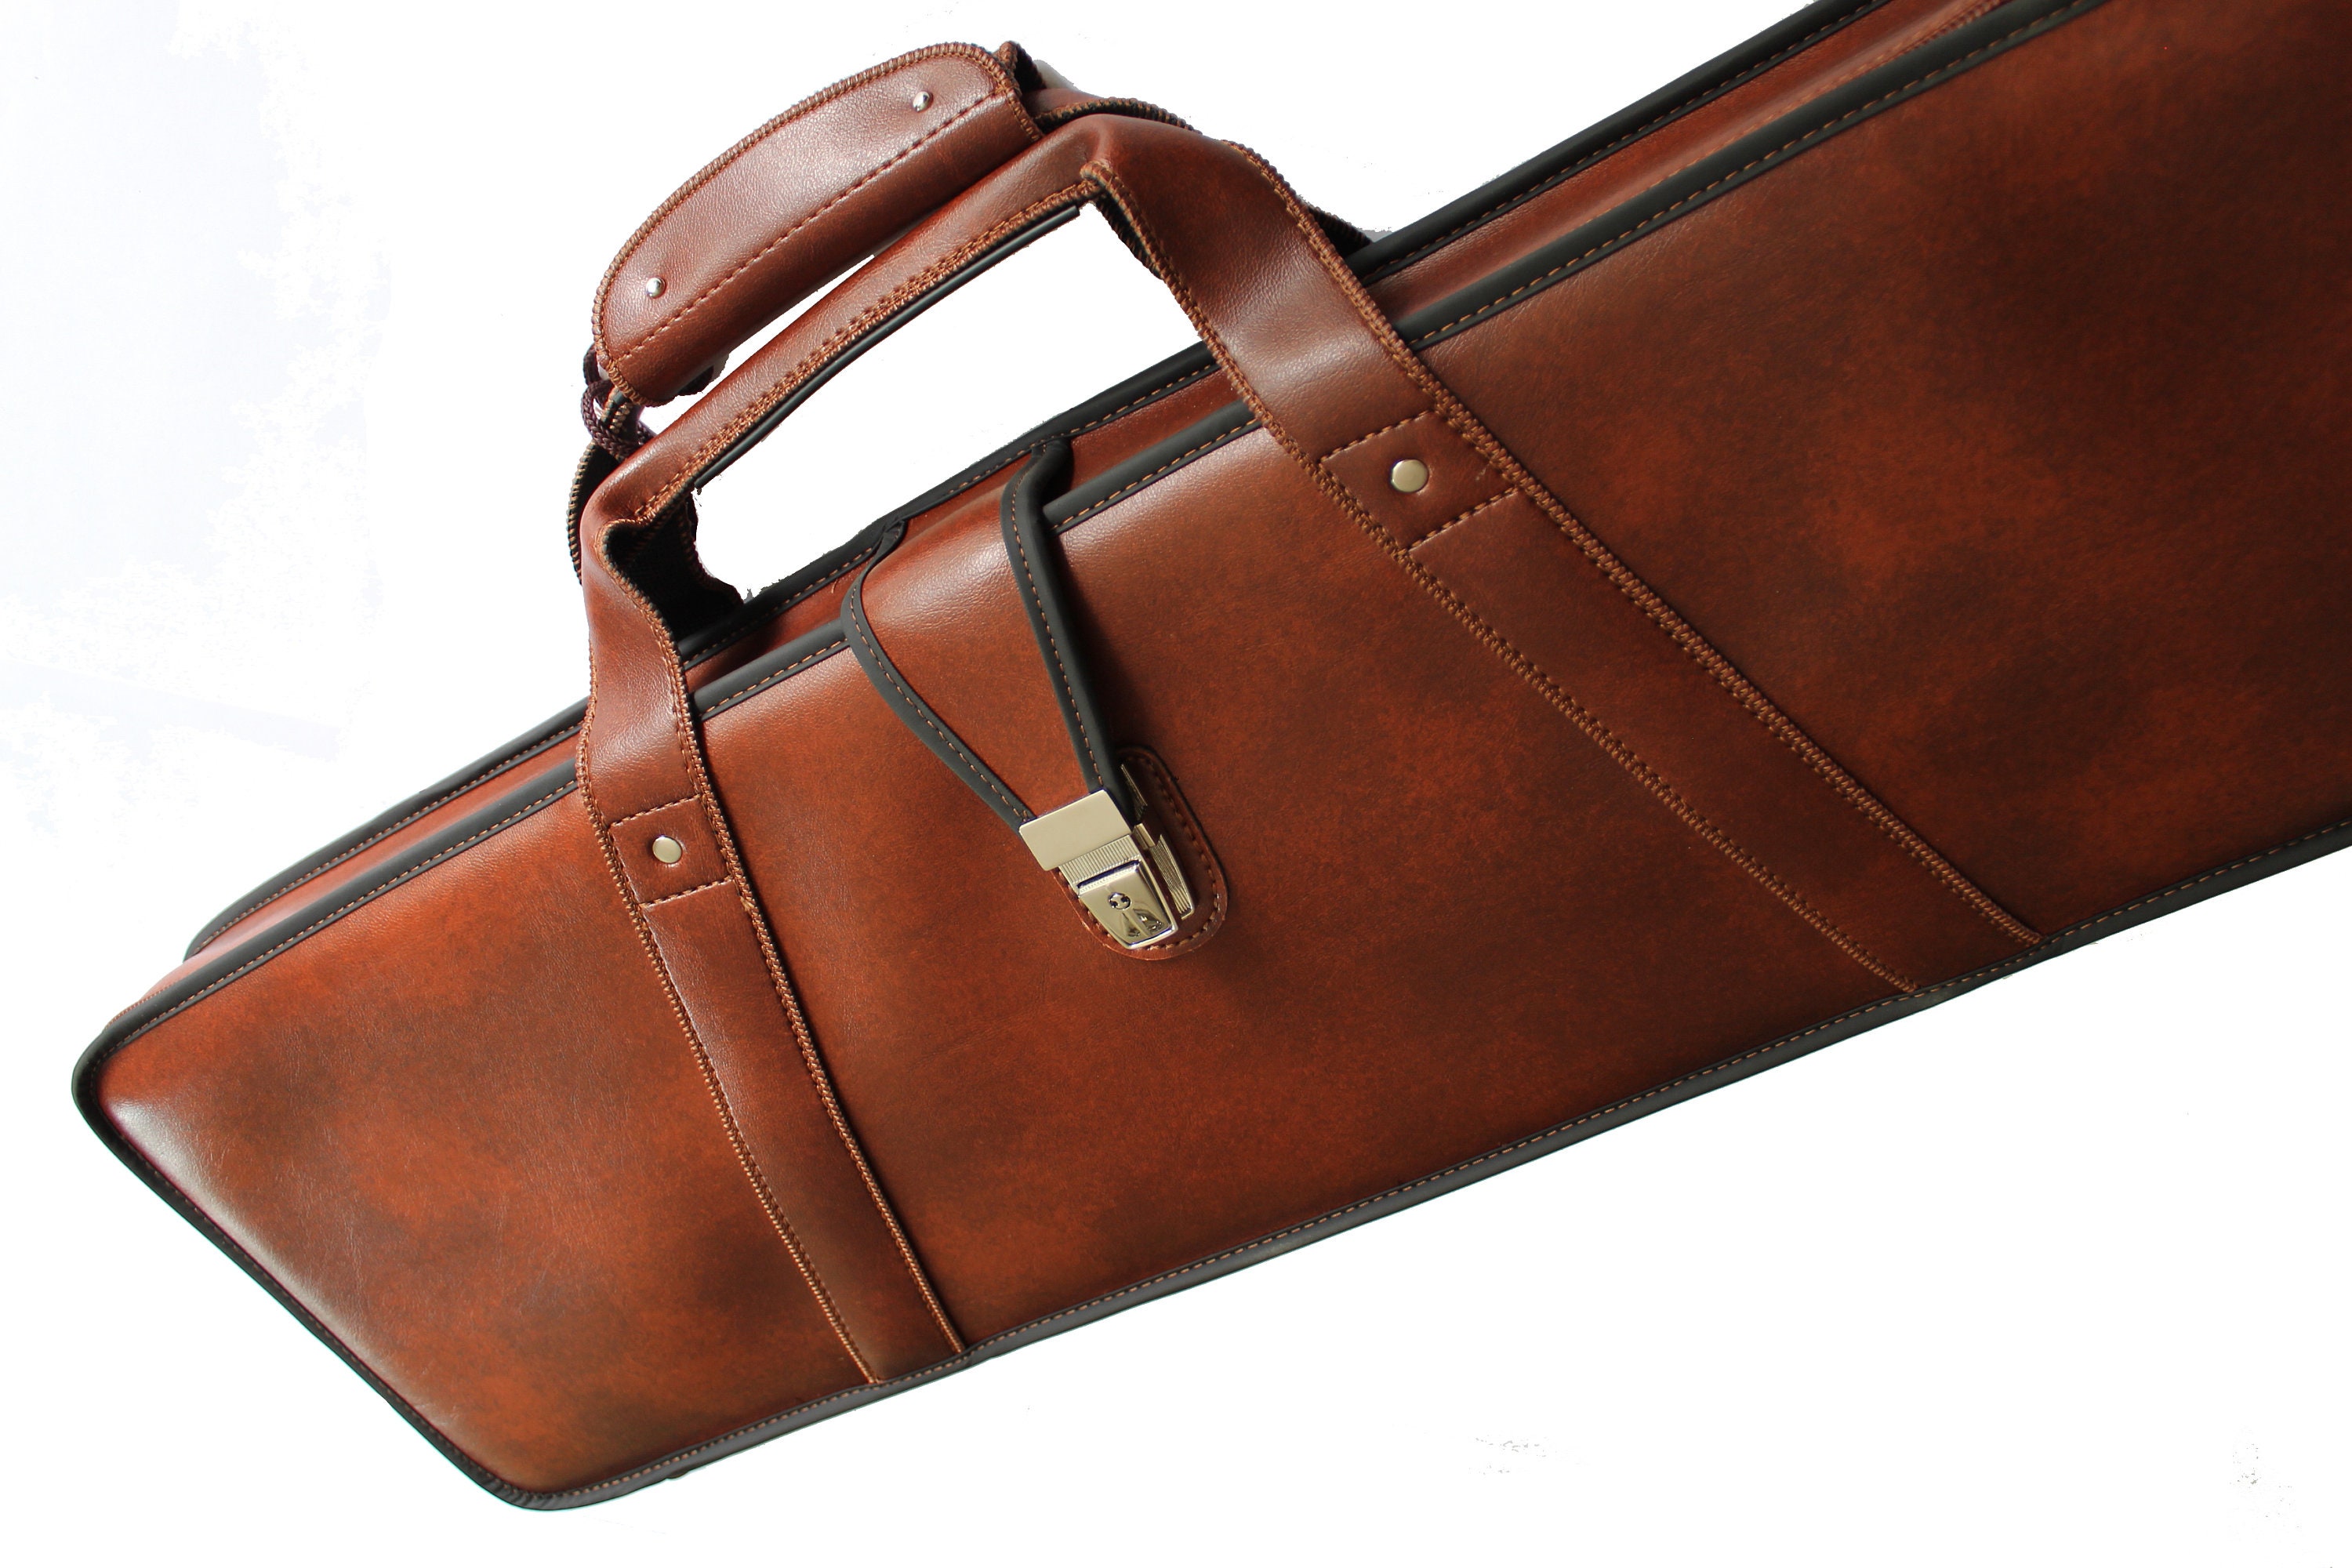 Leather Rifle Case Gun Case Bag Suitcase For Shotgun Or Rifle Etsy